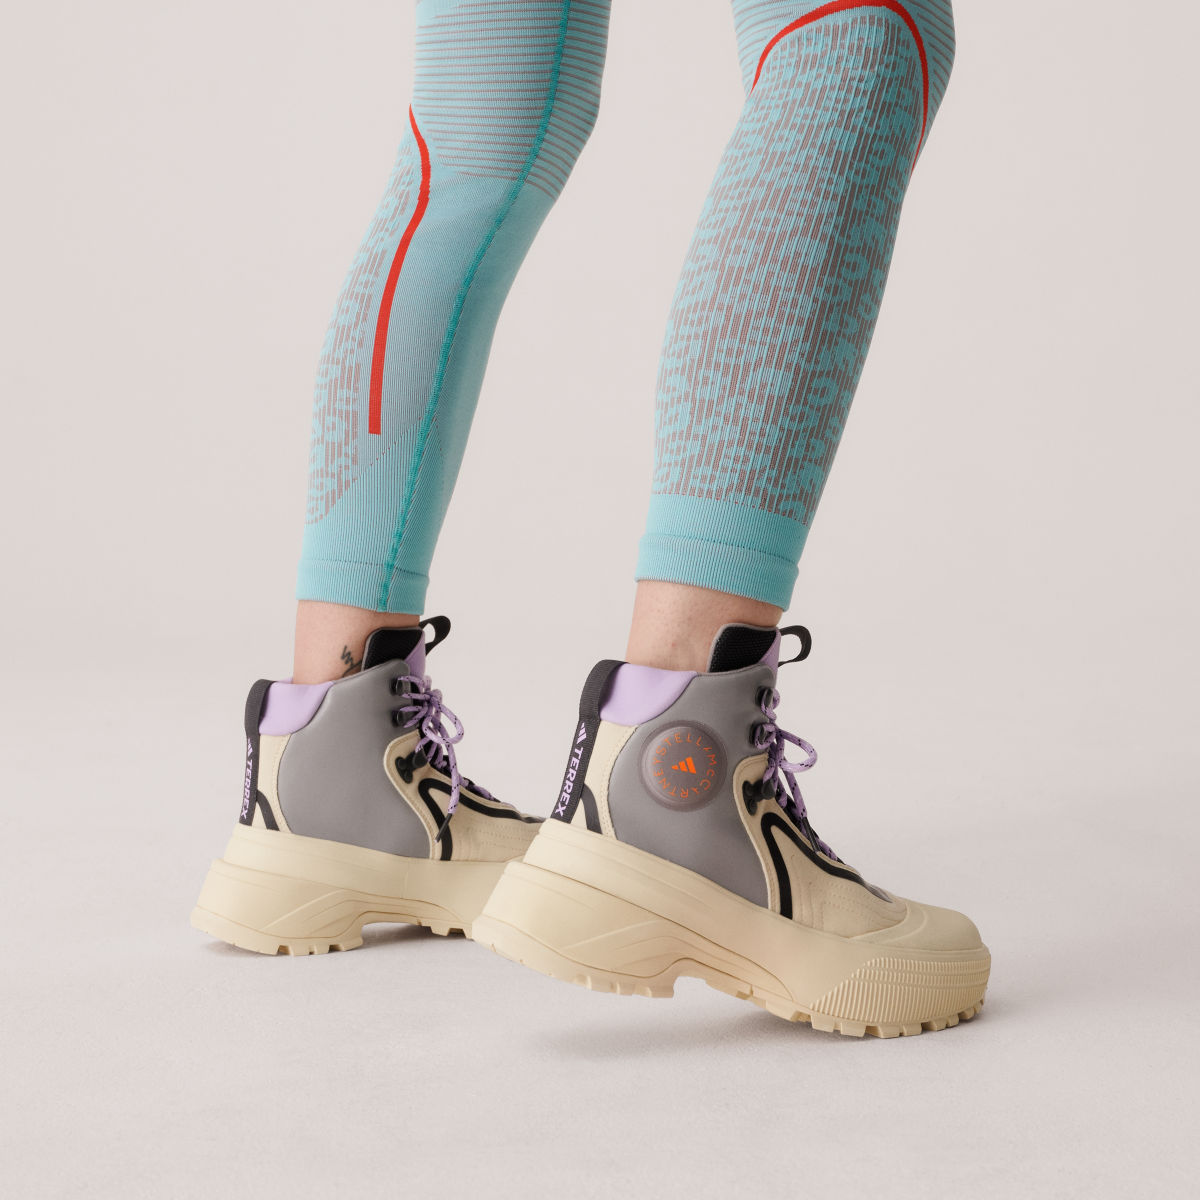 Adidas Chaussure de randonnée adidas by Stella McCartney x Terrex. 7